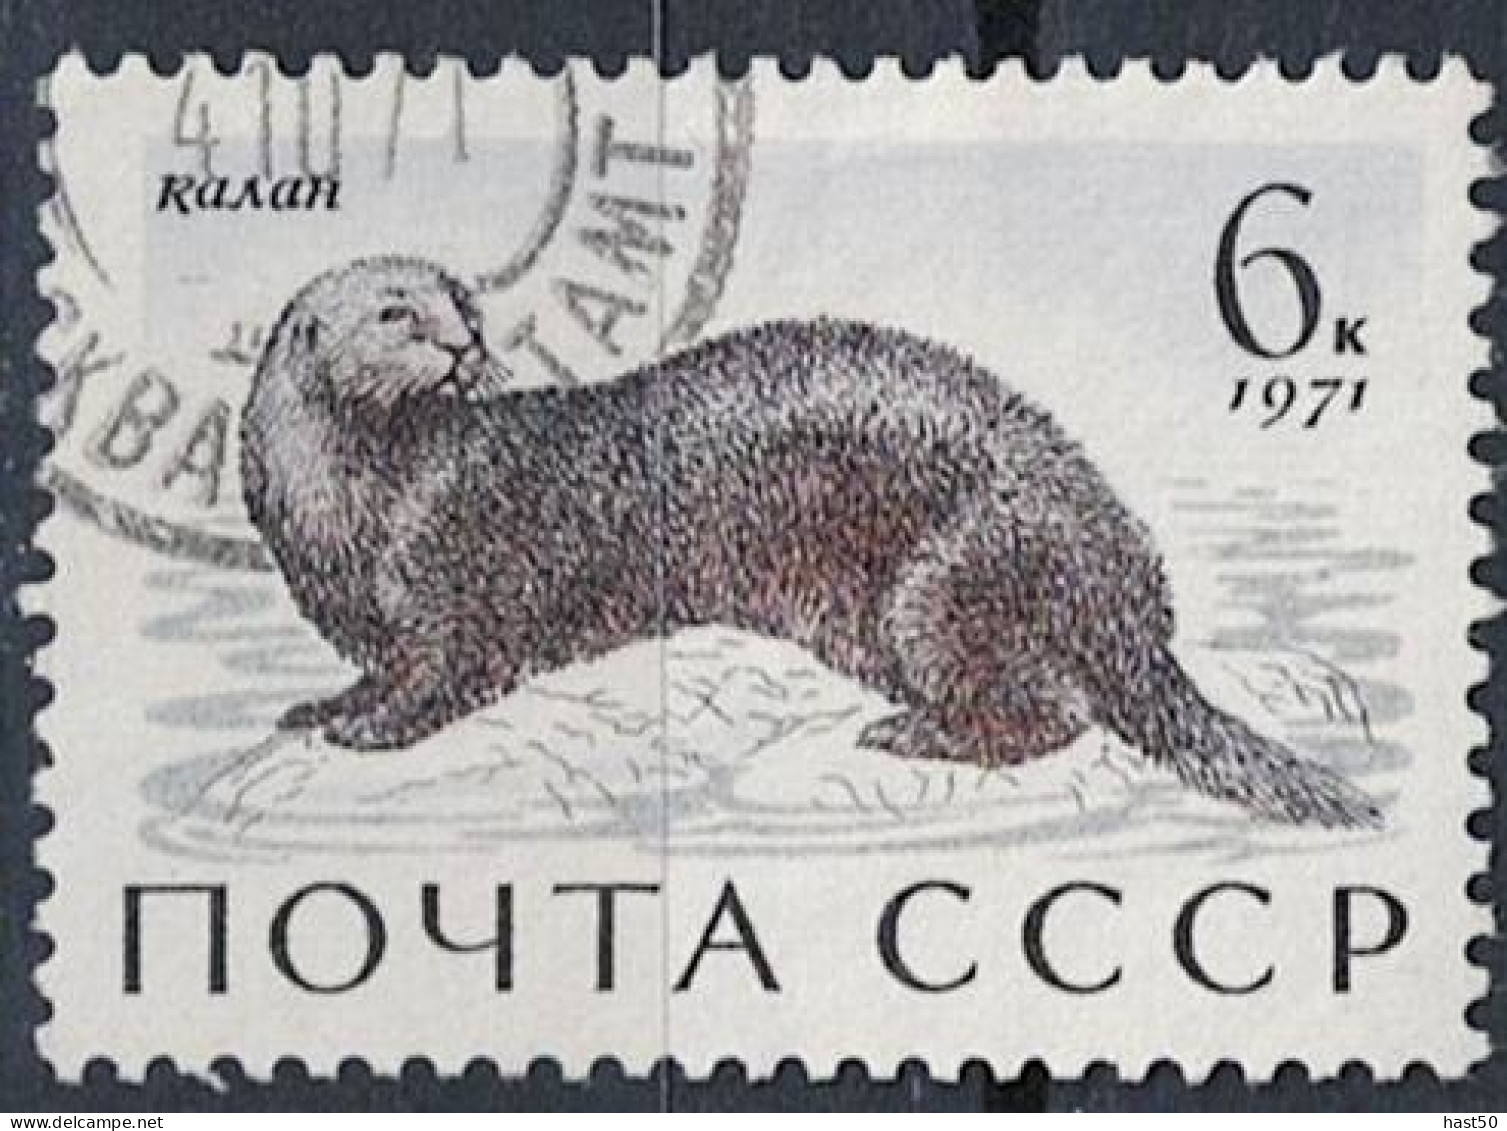 Sowjetunion UdSSR - Seeotter (Enhydra Lutris) (MiNr. 3914) 1971 - Gest Used Obl - Usati